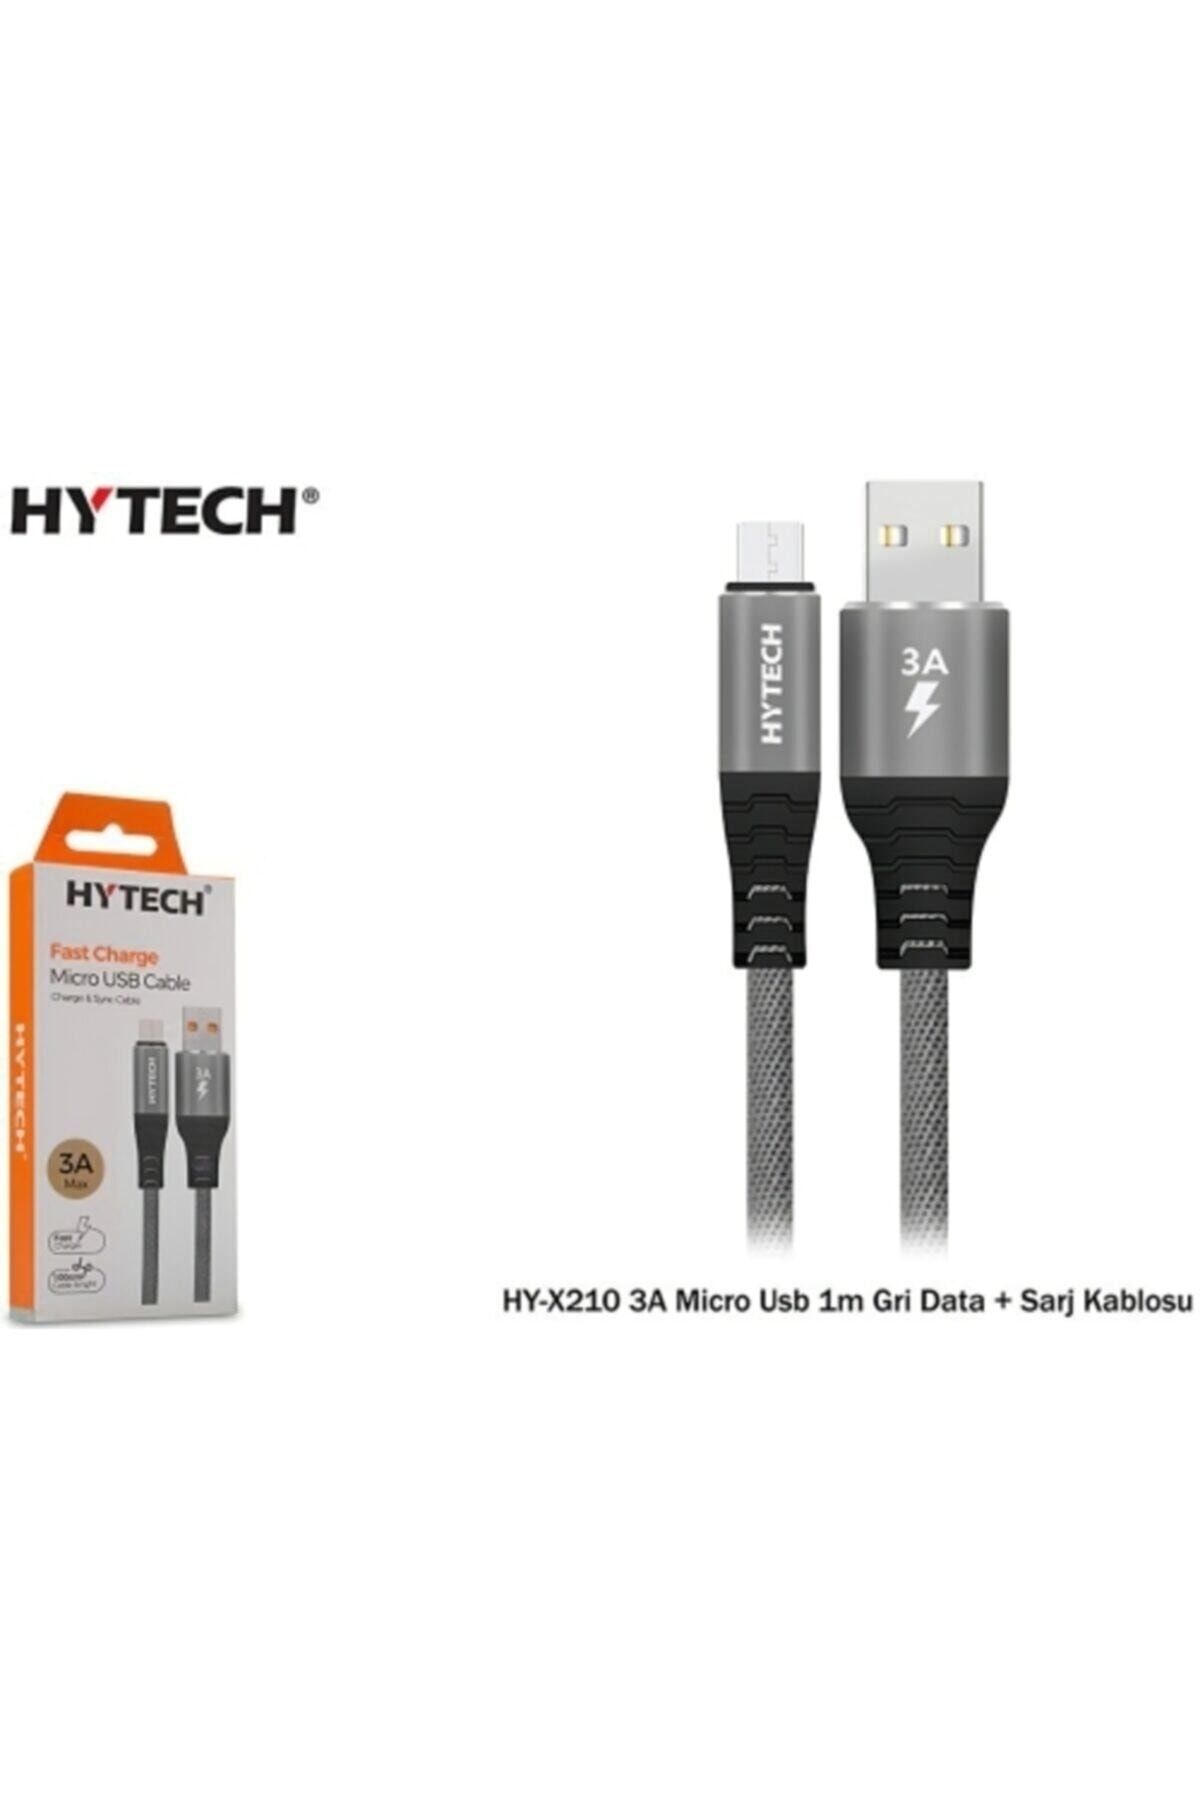 HYTECH Batty Hy-x210 3a Micro Usb Hızlı Şarj & Data Kablosu Metalik Gri